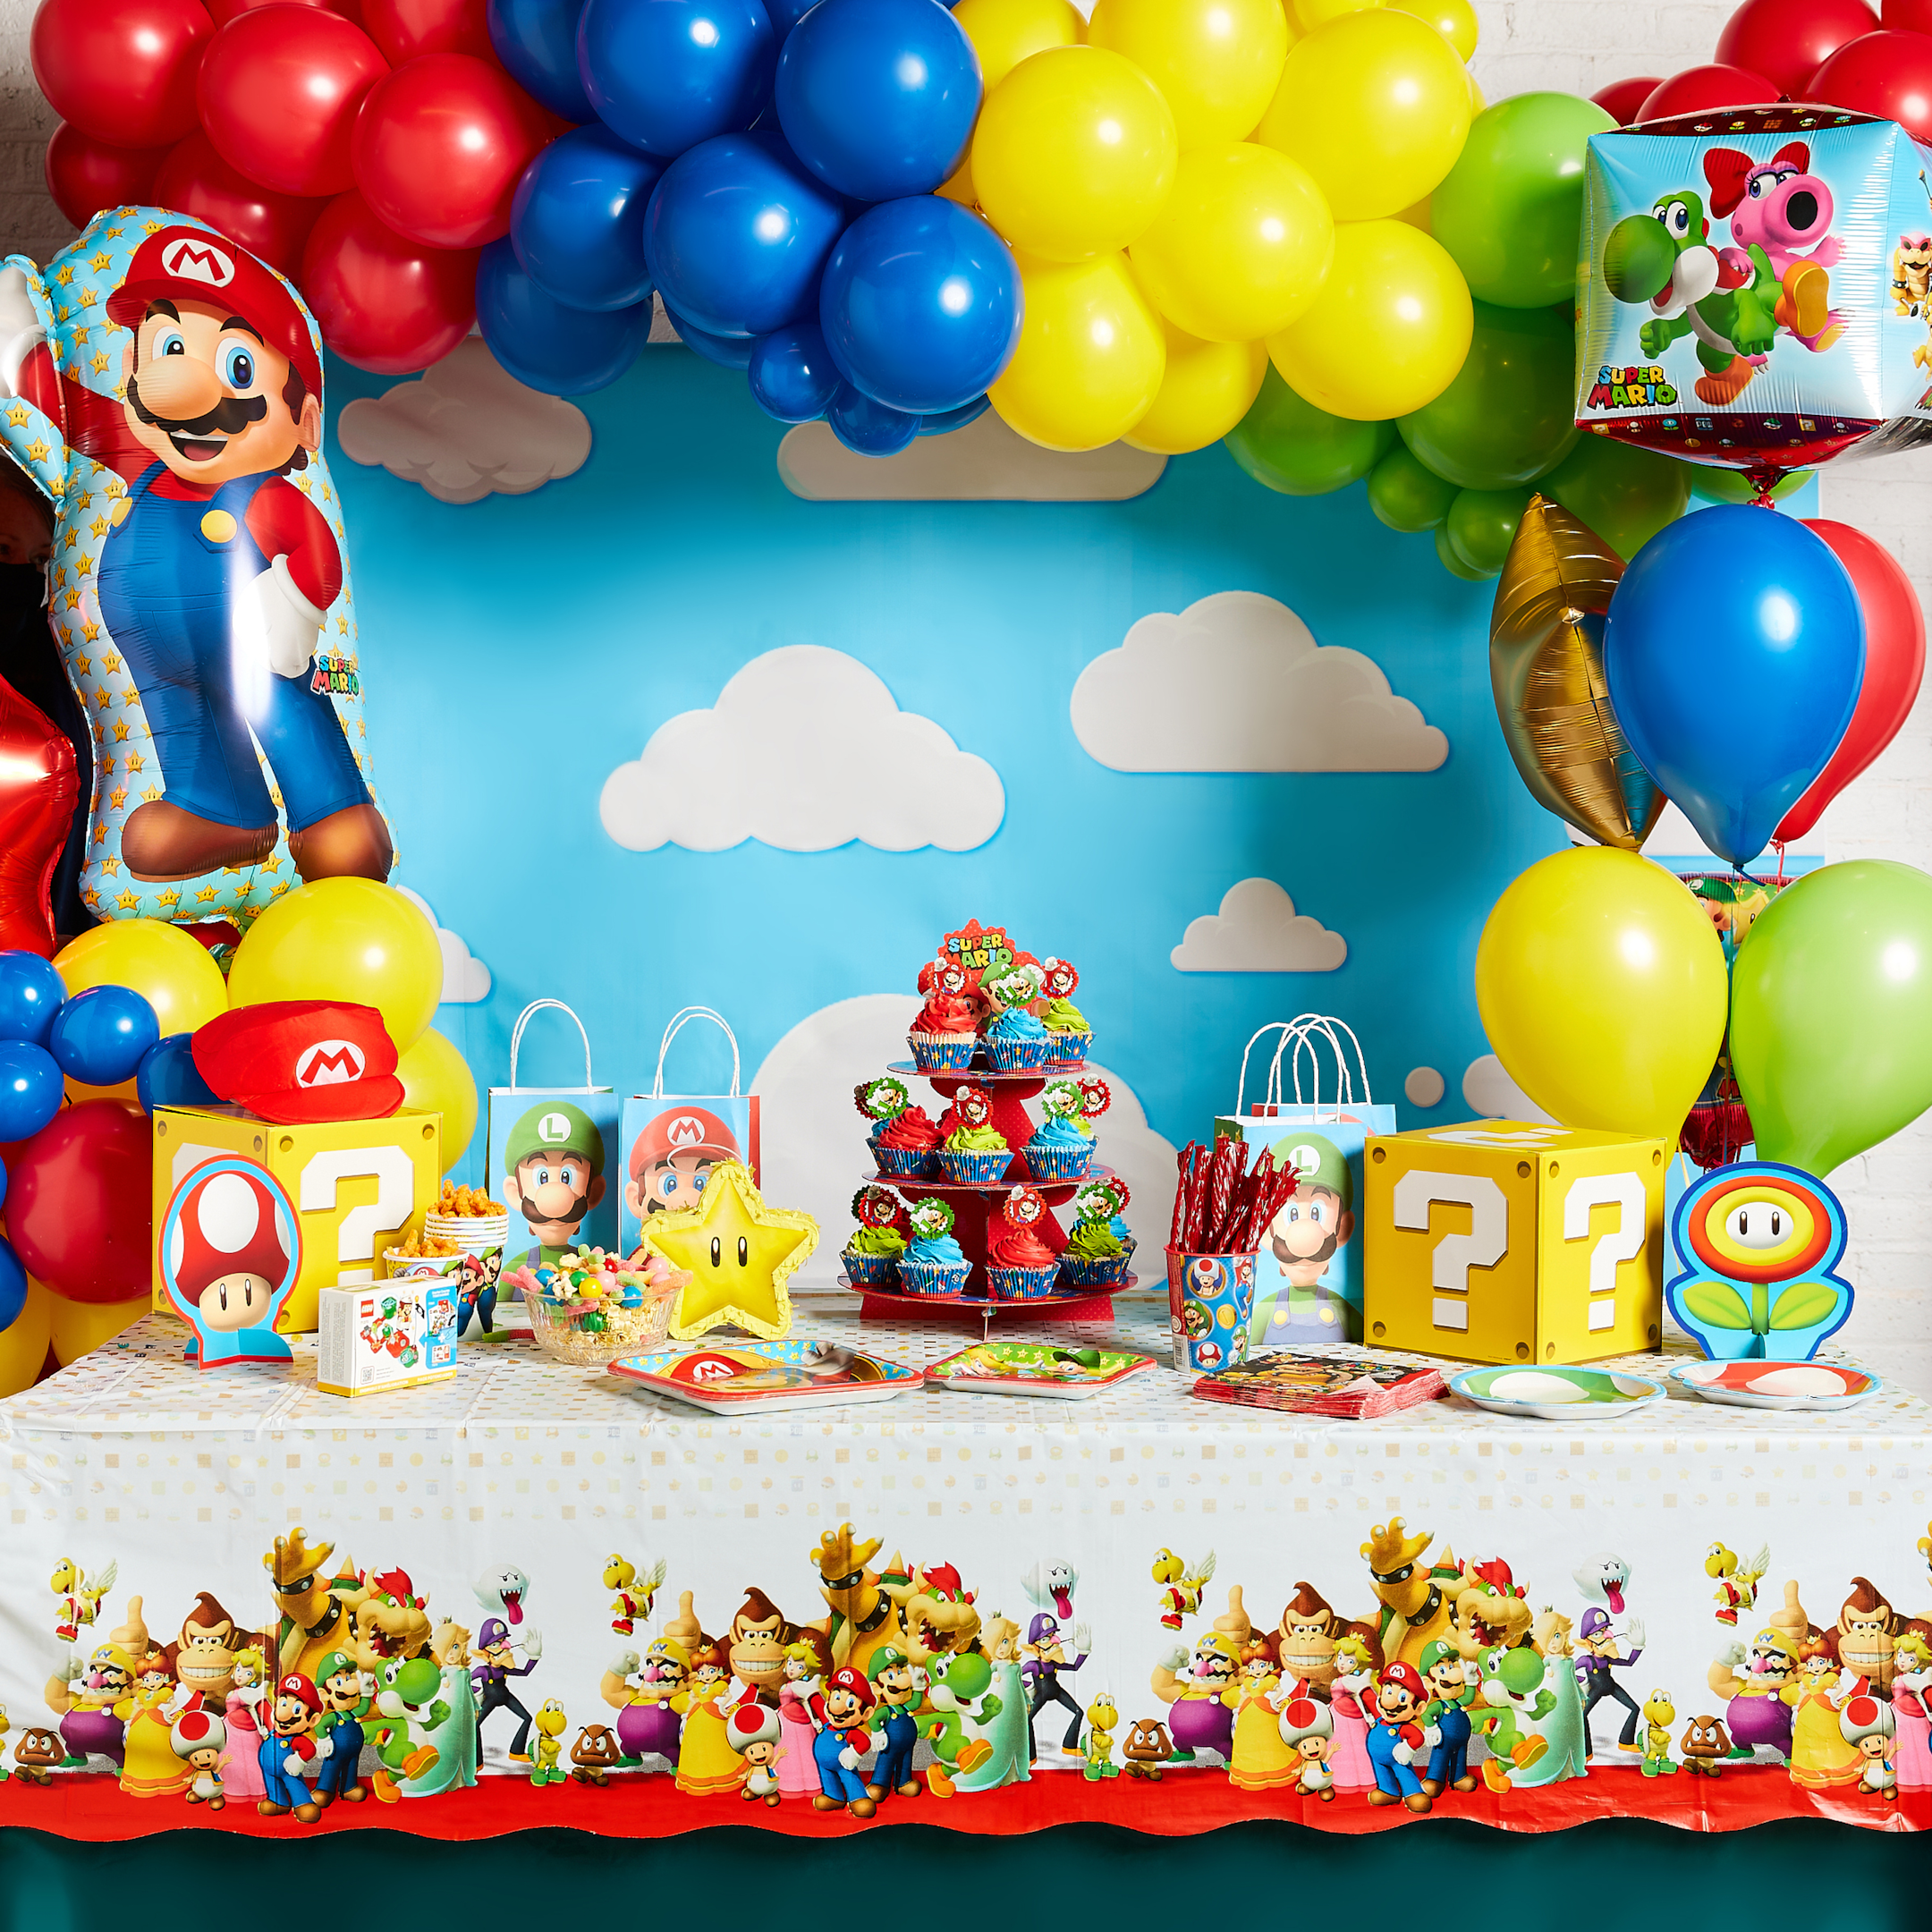 Nintendo Super Mario Brothers Themed Birthday Party Idea